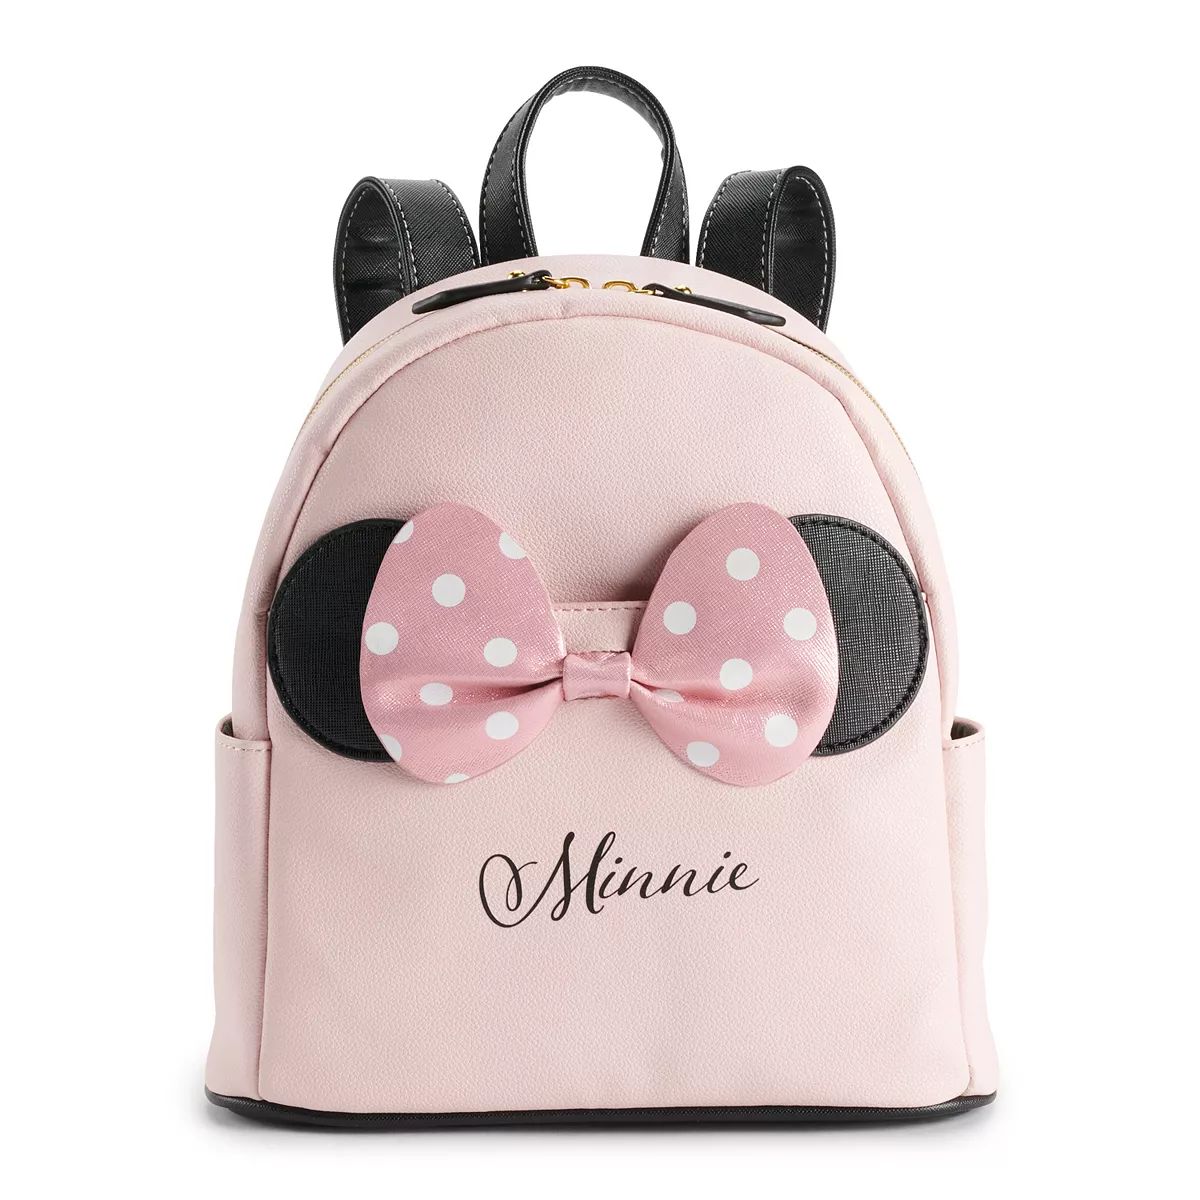 Danielle Nicole Disney's Minnie Mouse Backpack | Kohl's